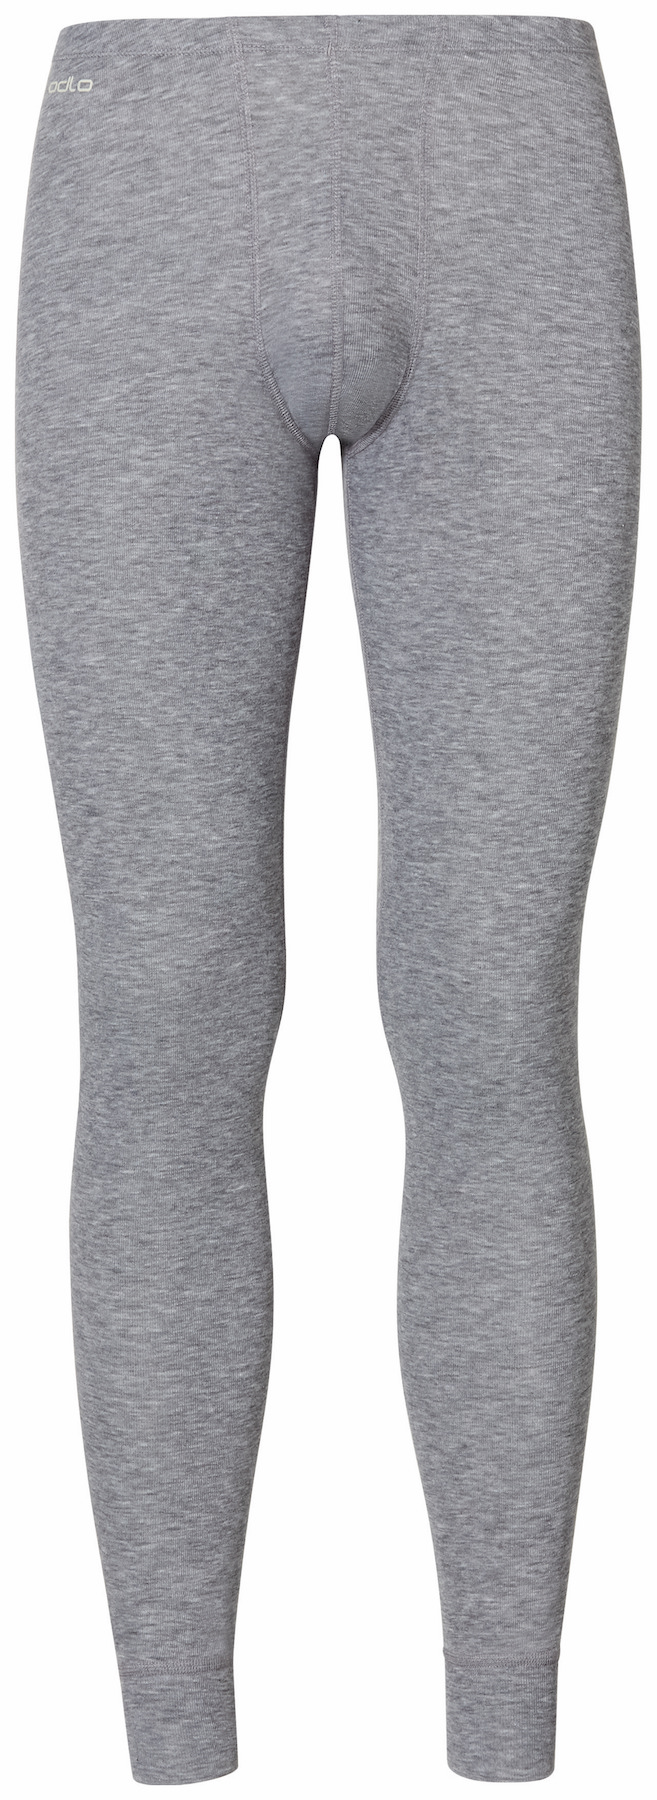 Odlo - Warm - Running trousers - Men's